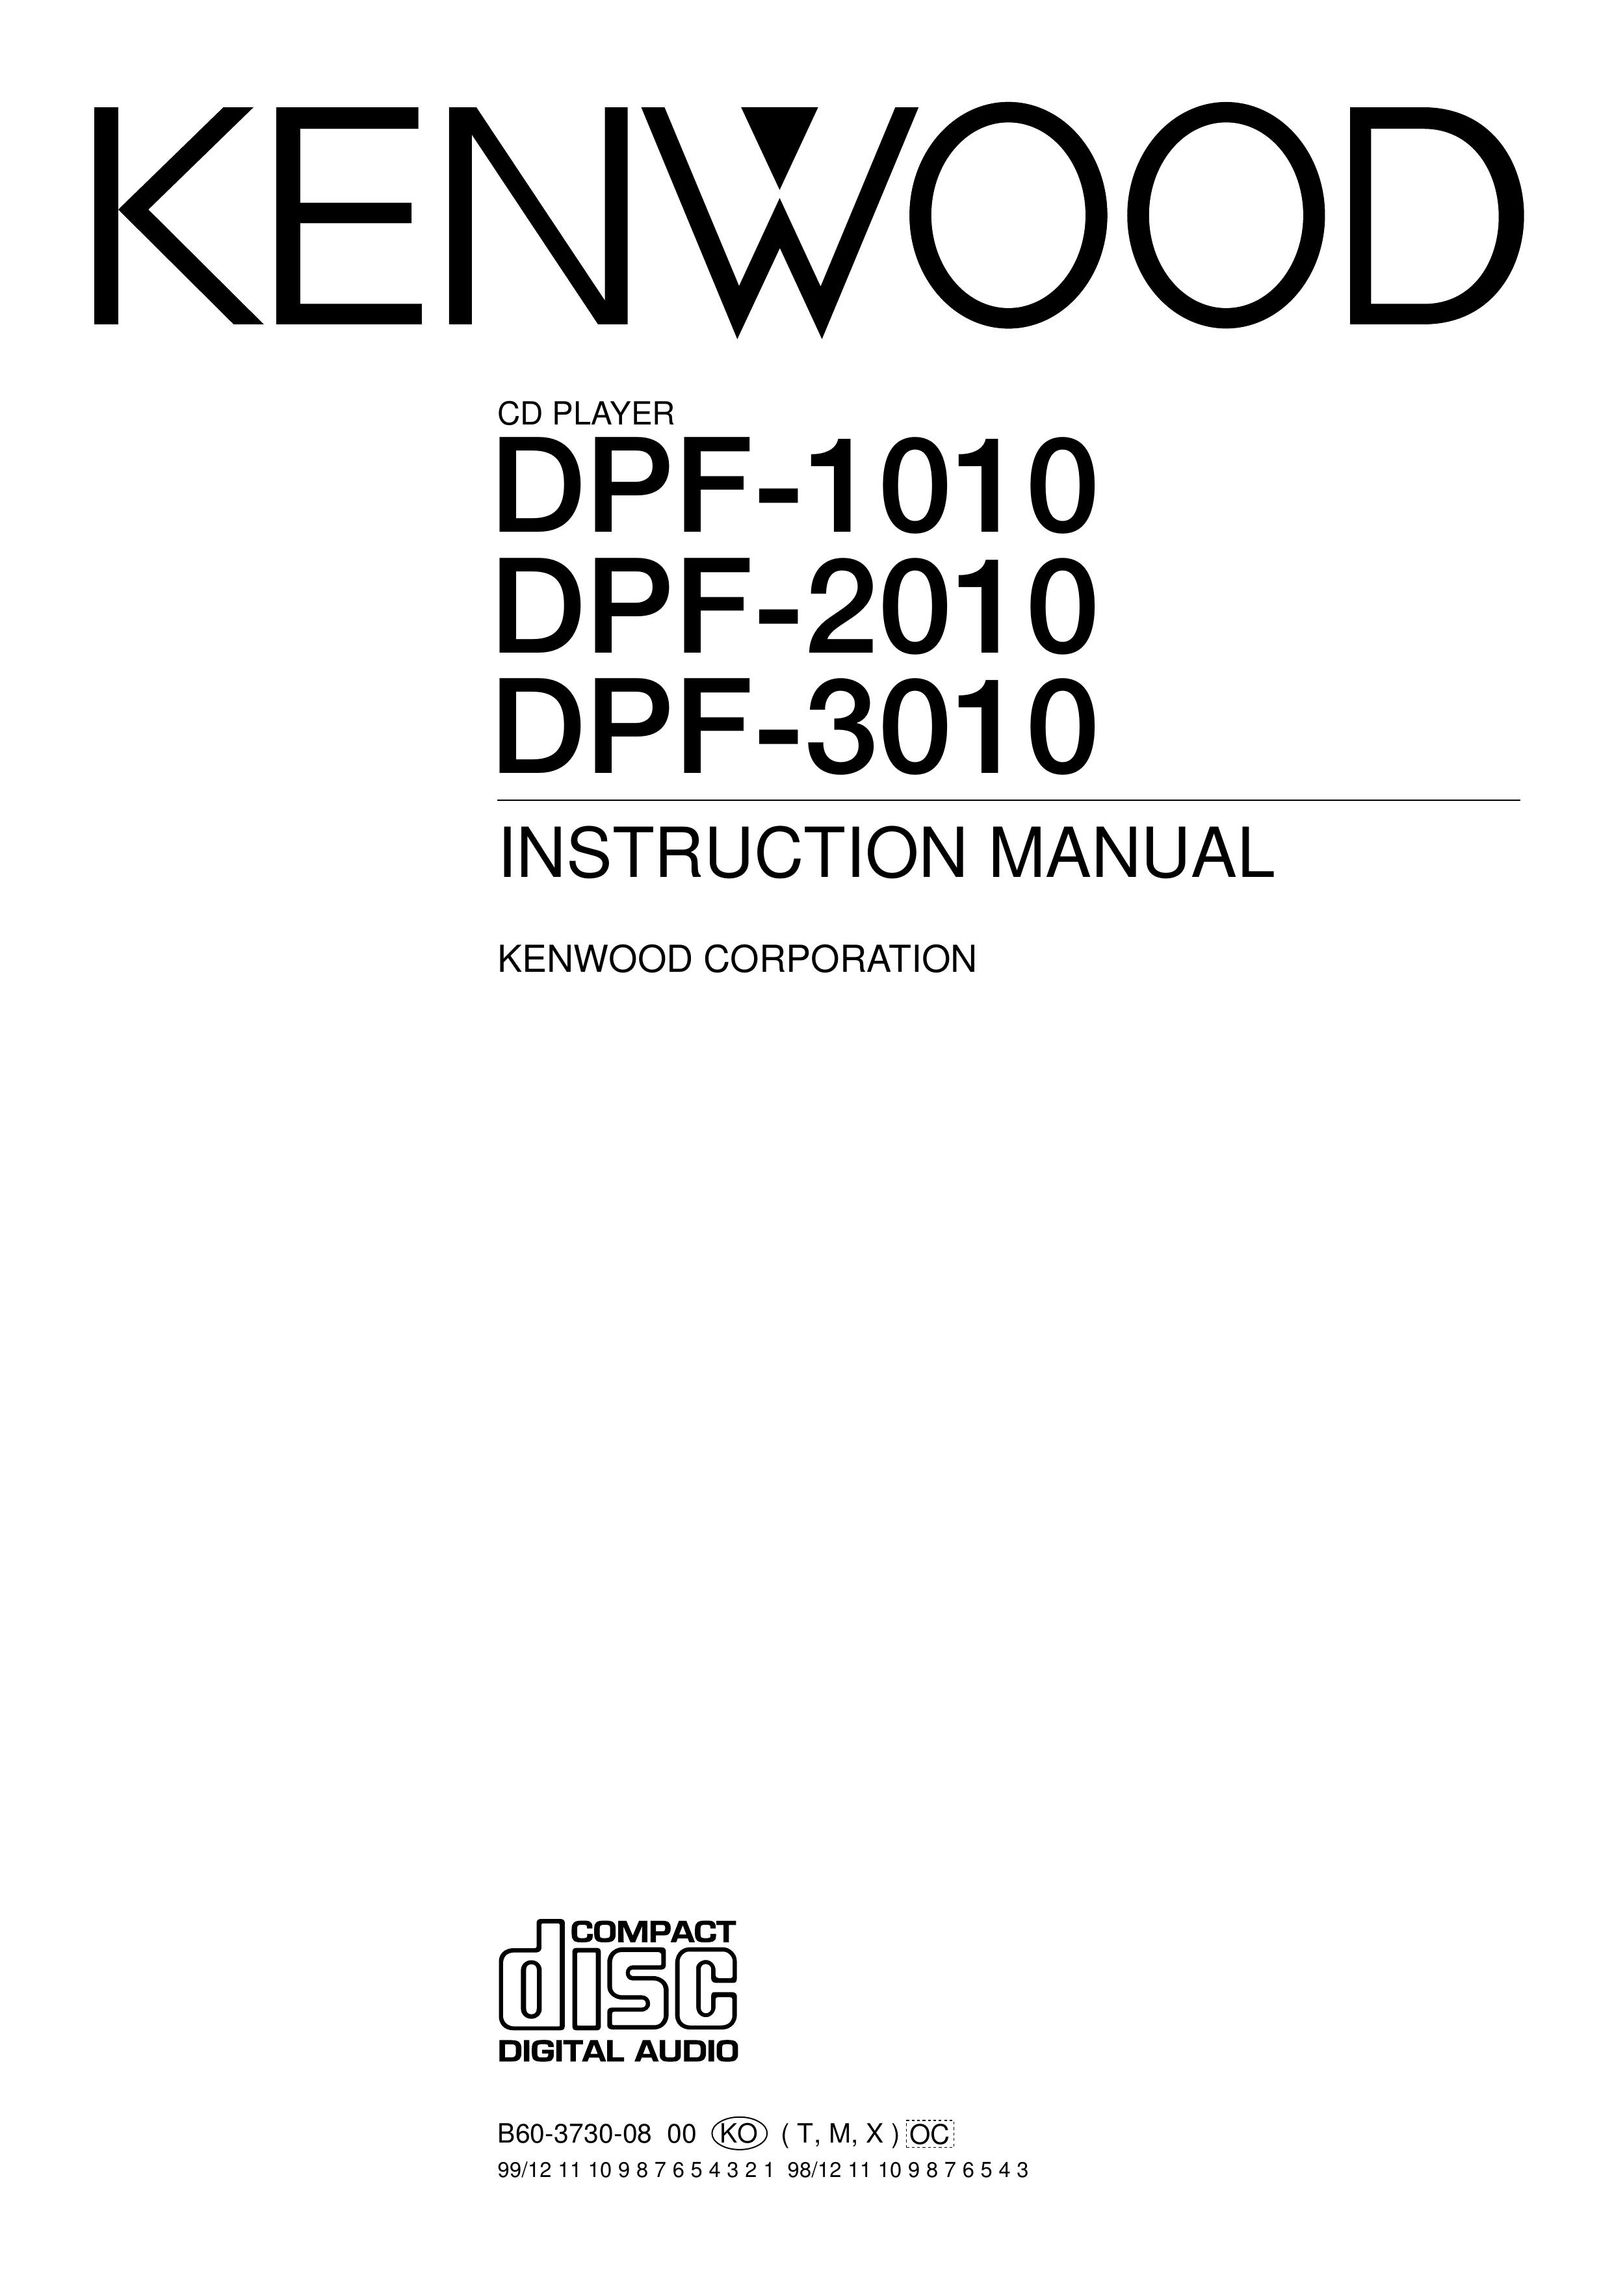 Kenwood DPF-1010 CD Player User Manual